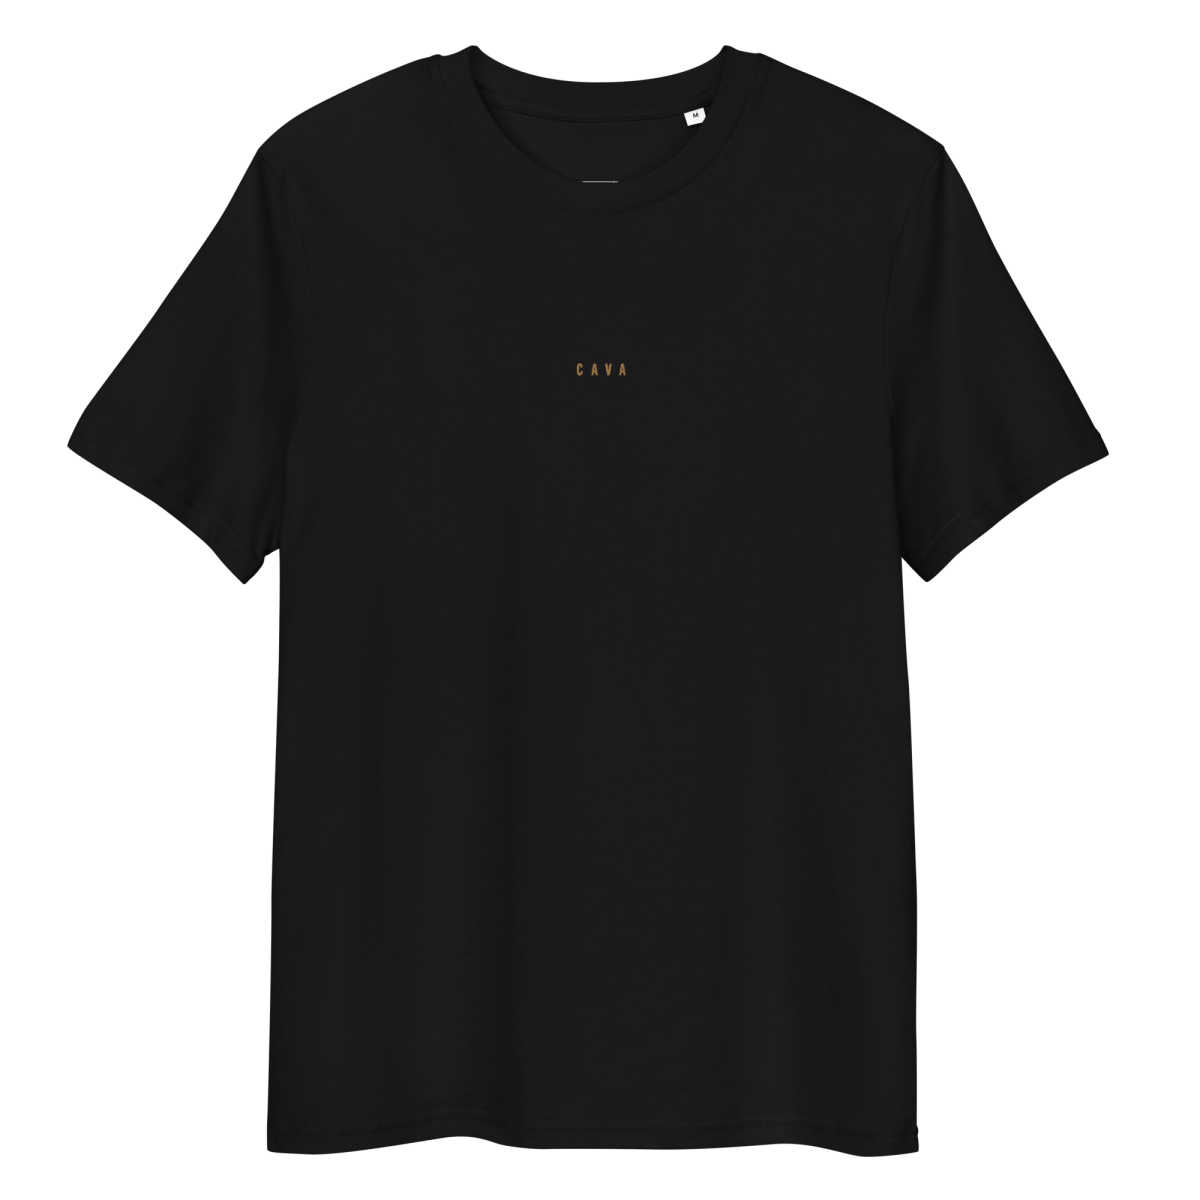 The Cava organic t-shirt